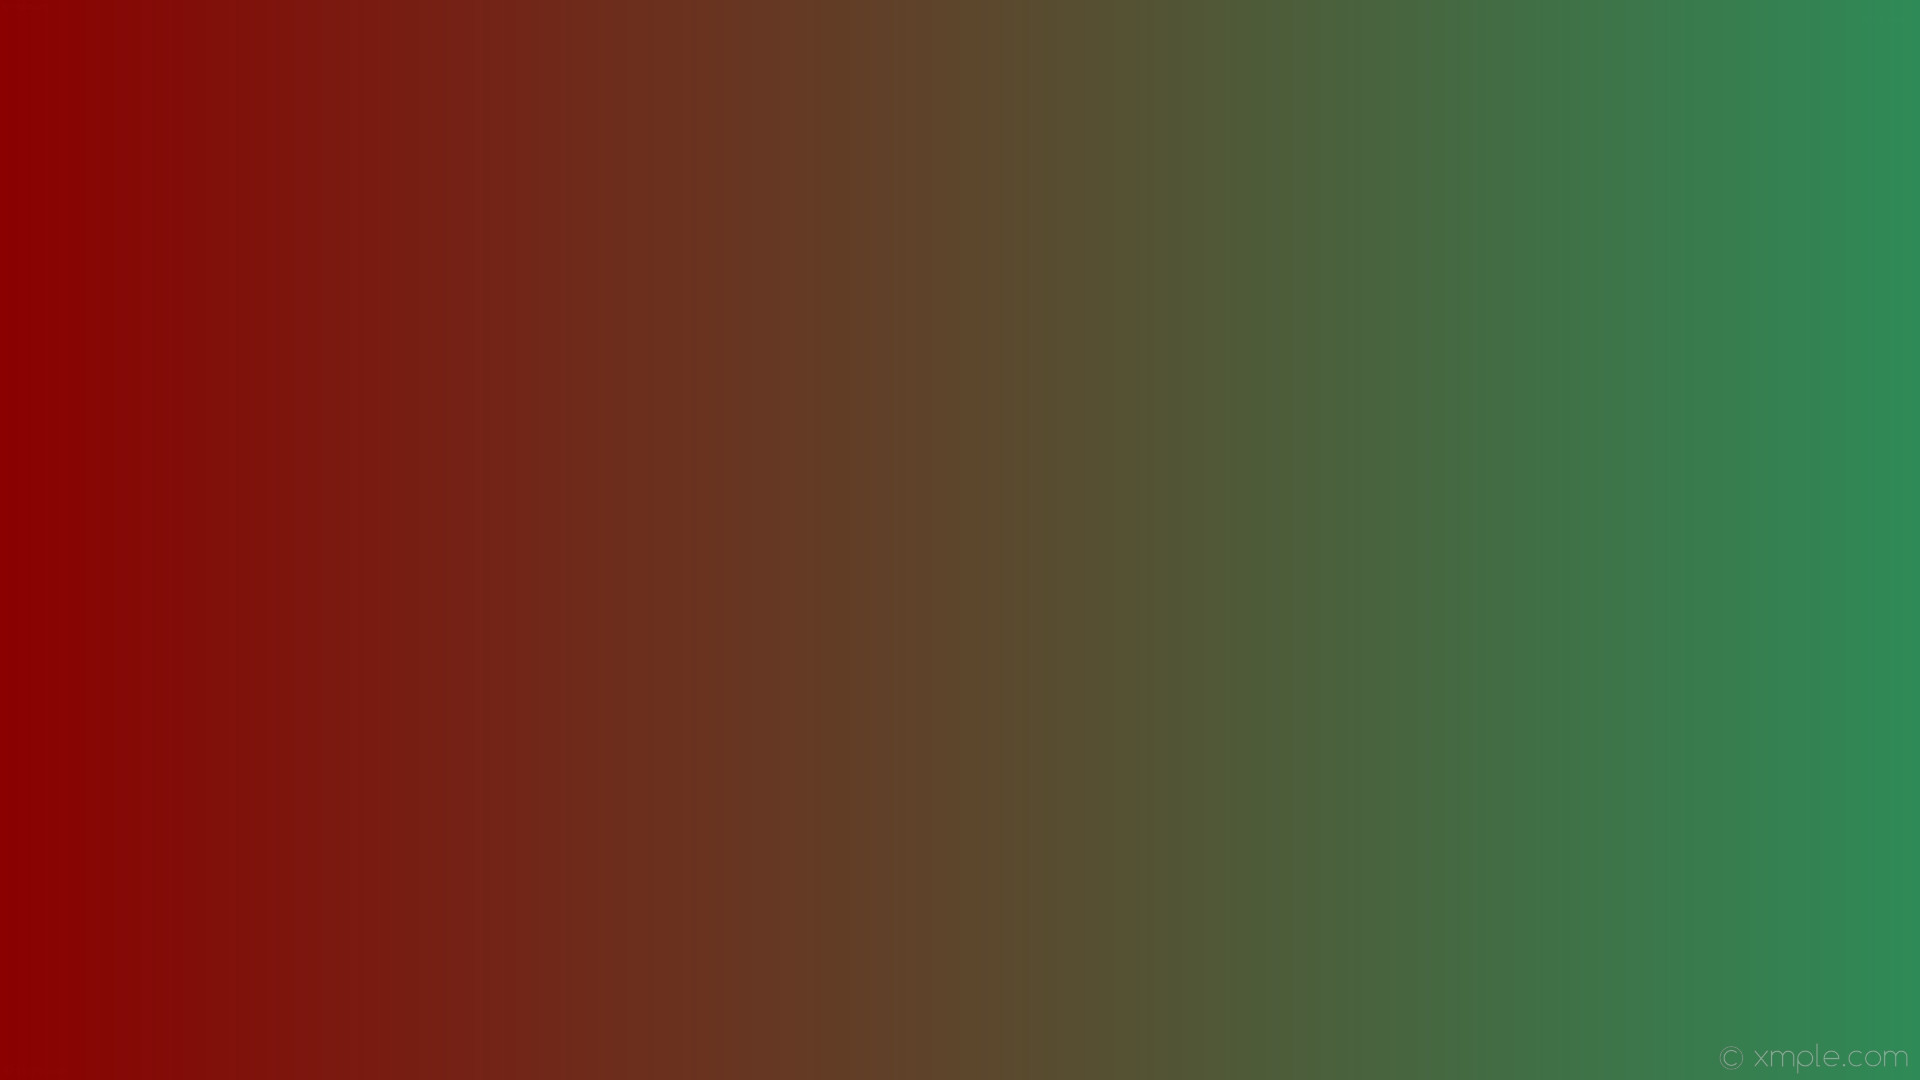 1920x1080 wallpaper red linear green gradient sea green dark red #2e8b57 #8b0000 0Â°